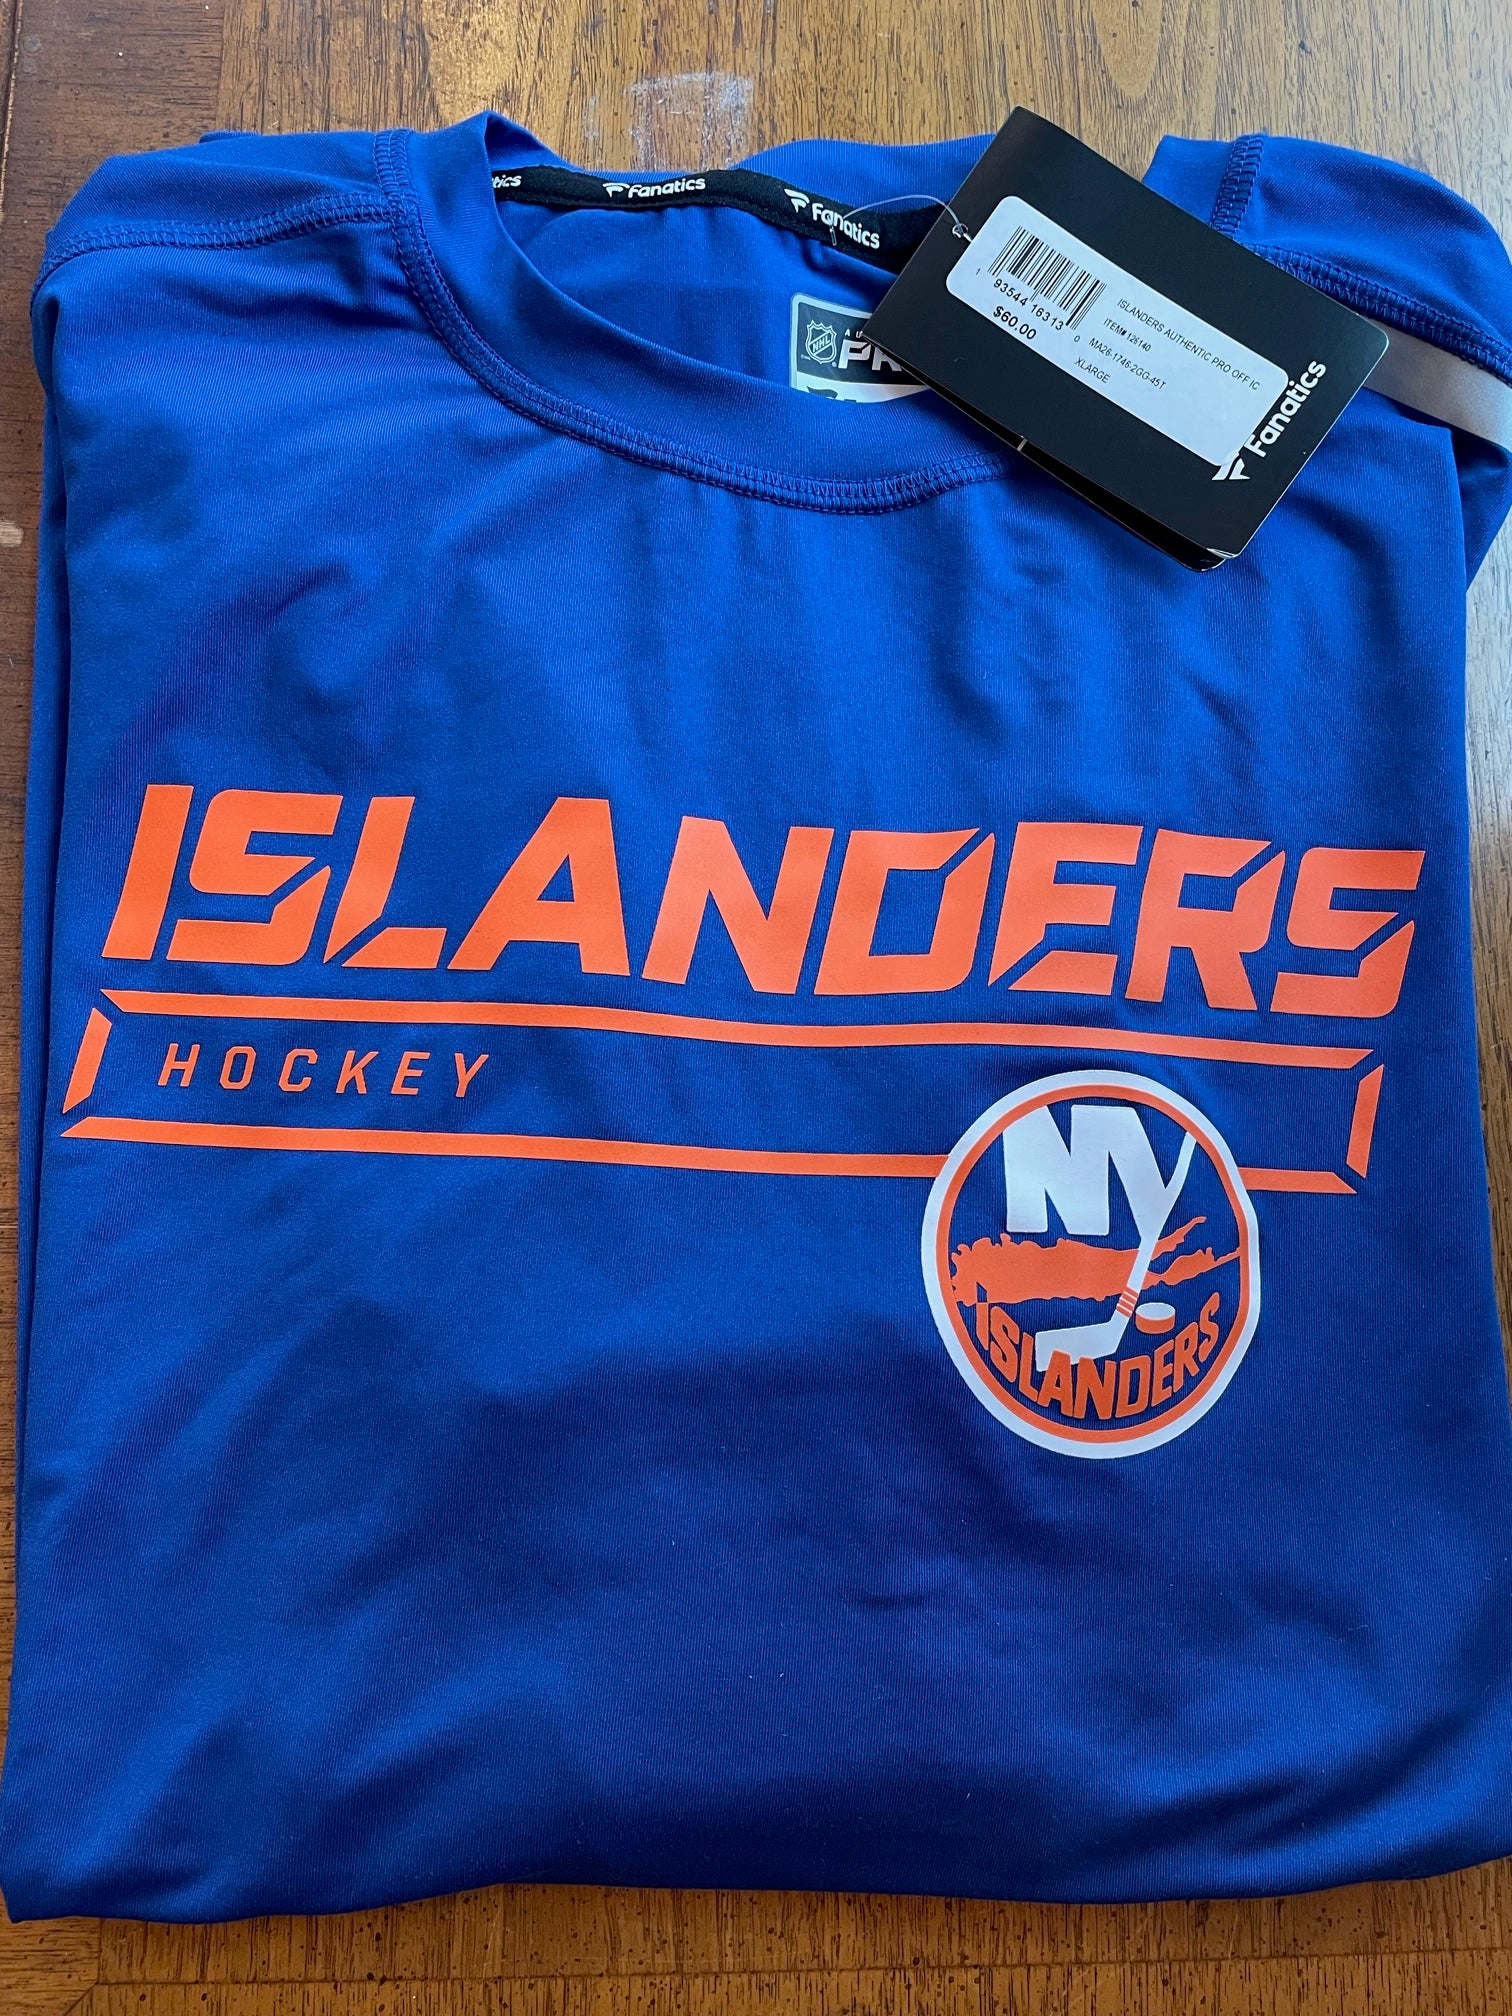 Cheap New York Islanders Apparel, Discount Islanders Gear, NHL